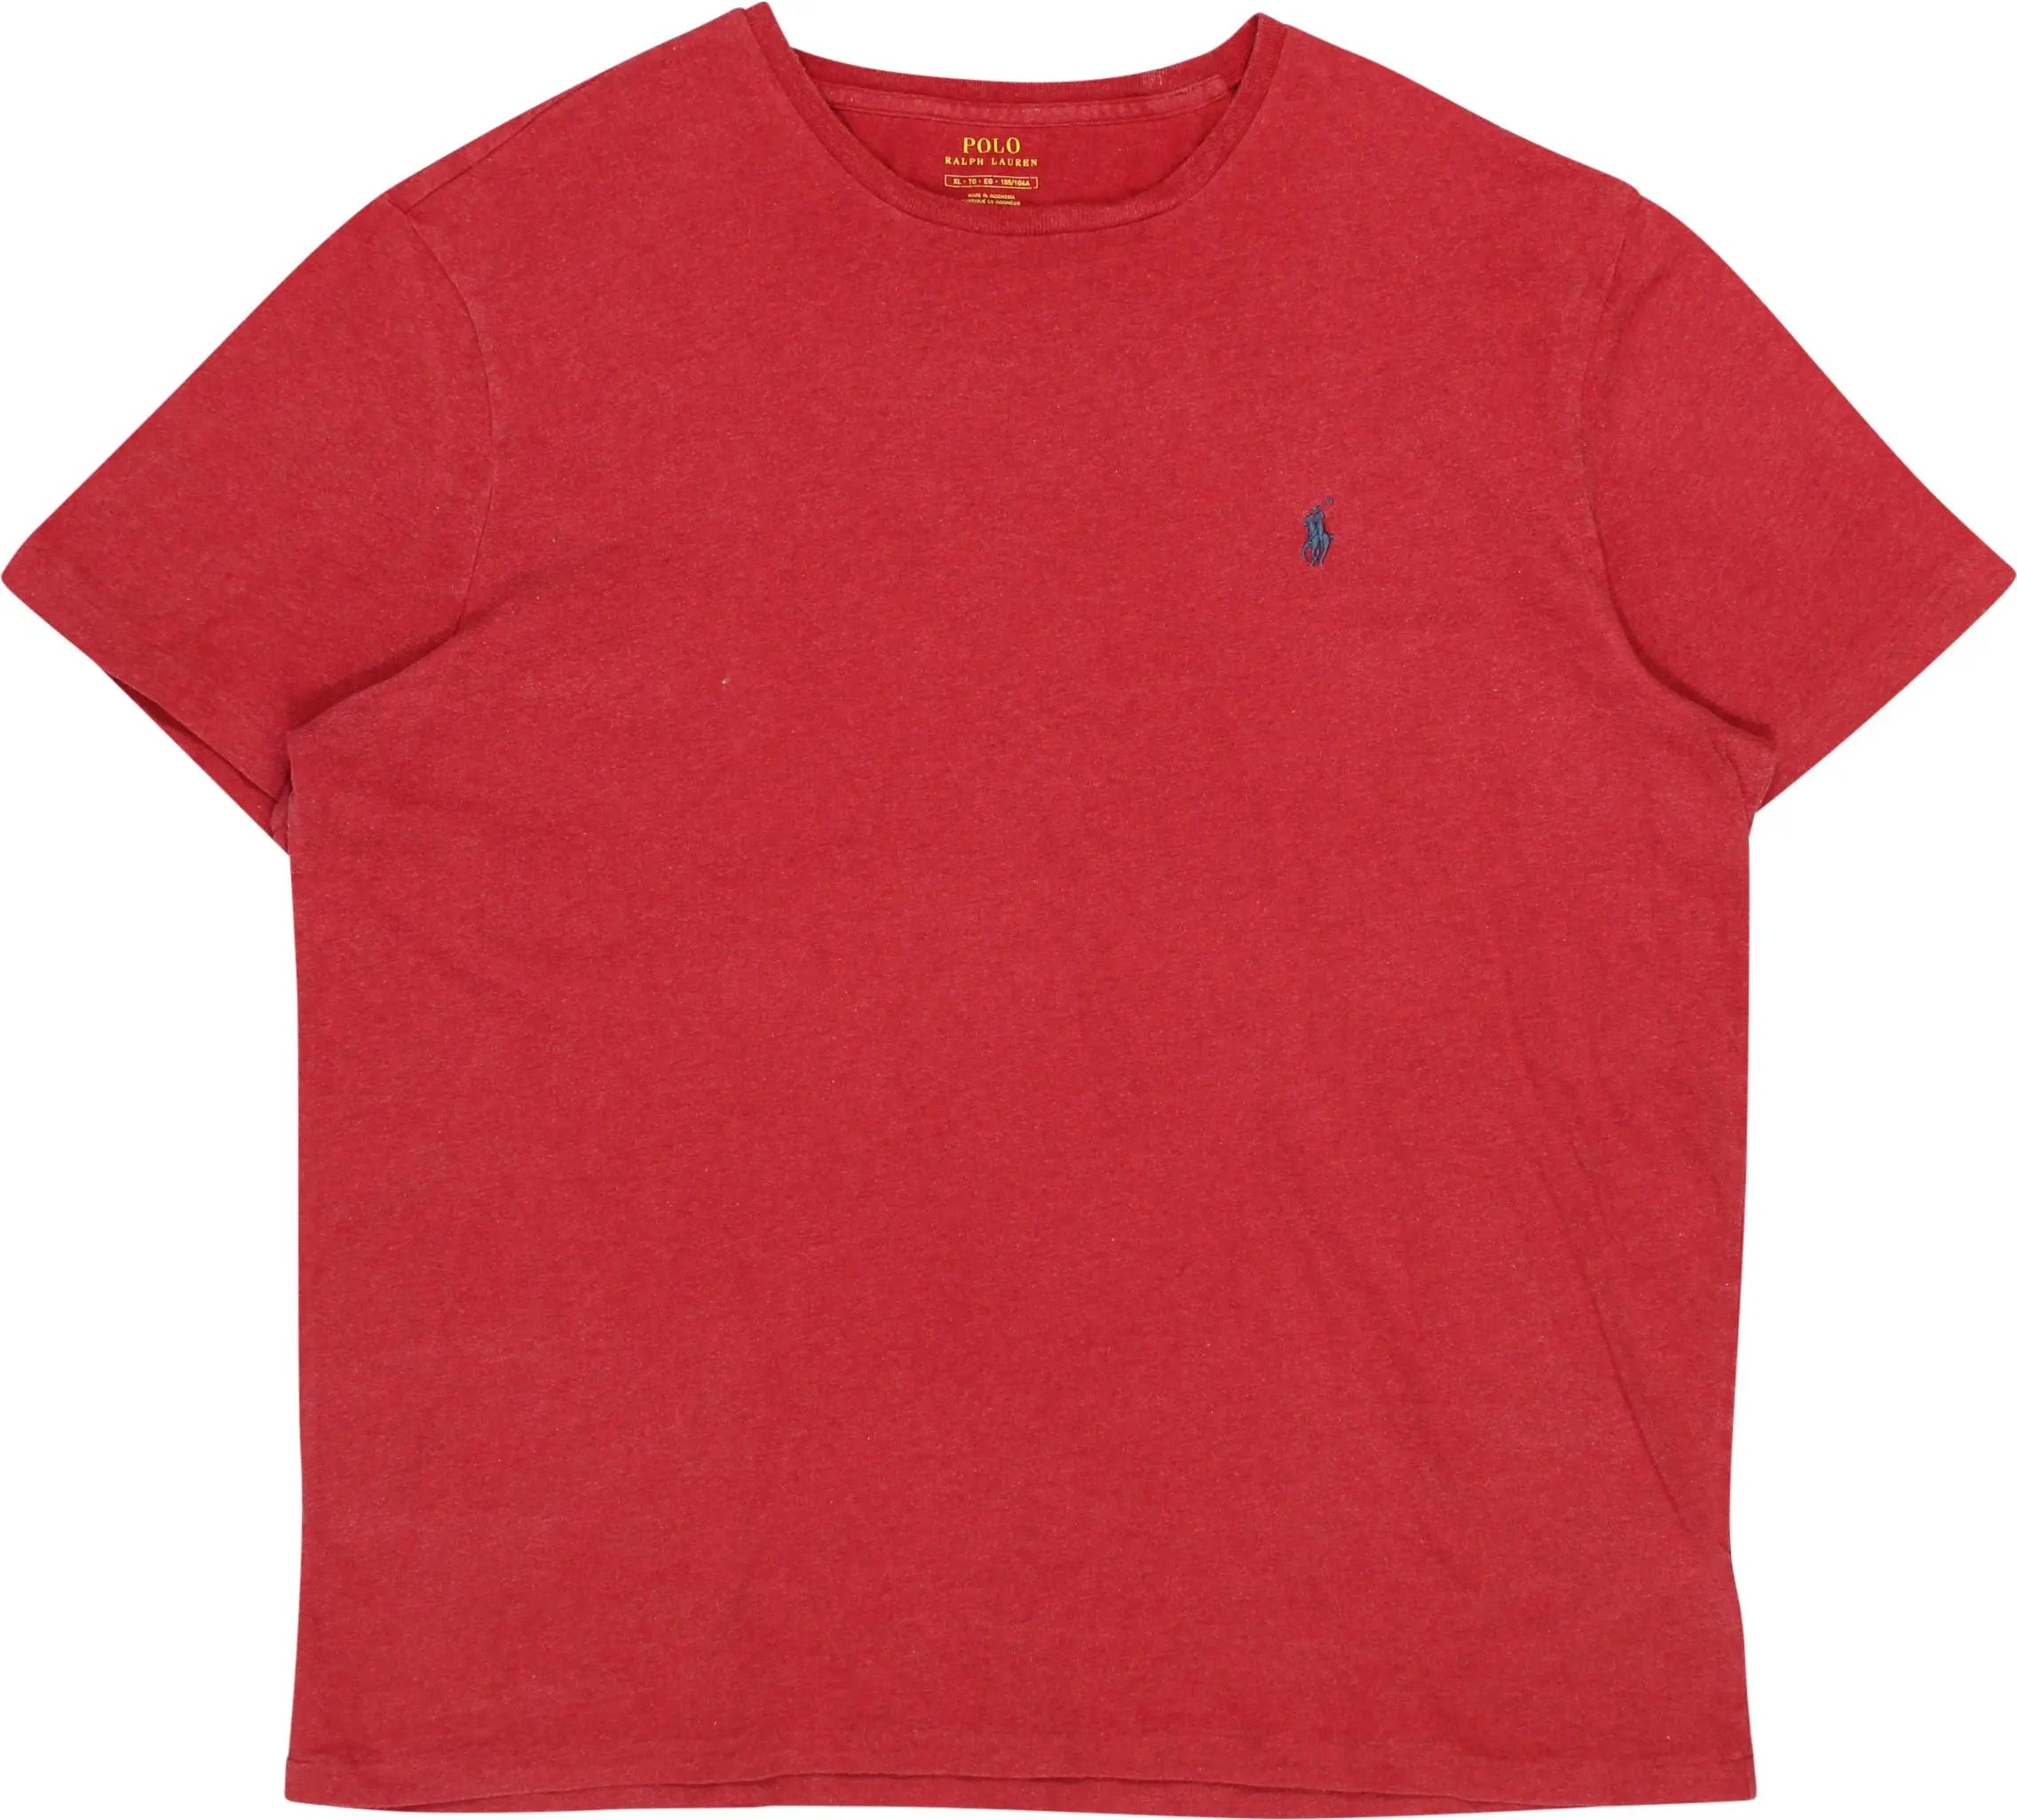 Ralph Lauren - Ralph Lauren T-shirt- ThriftTale.com - Vintage and second handclothing